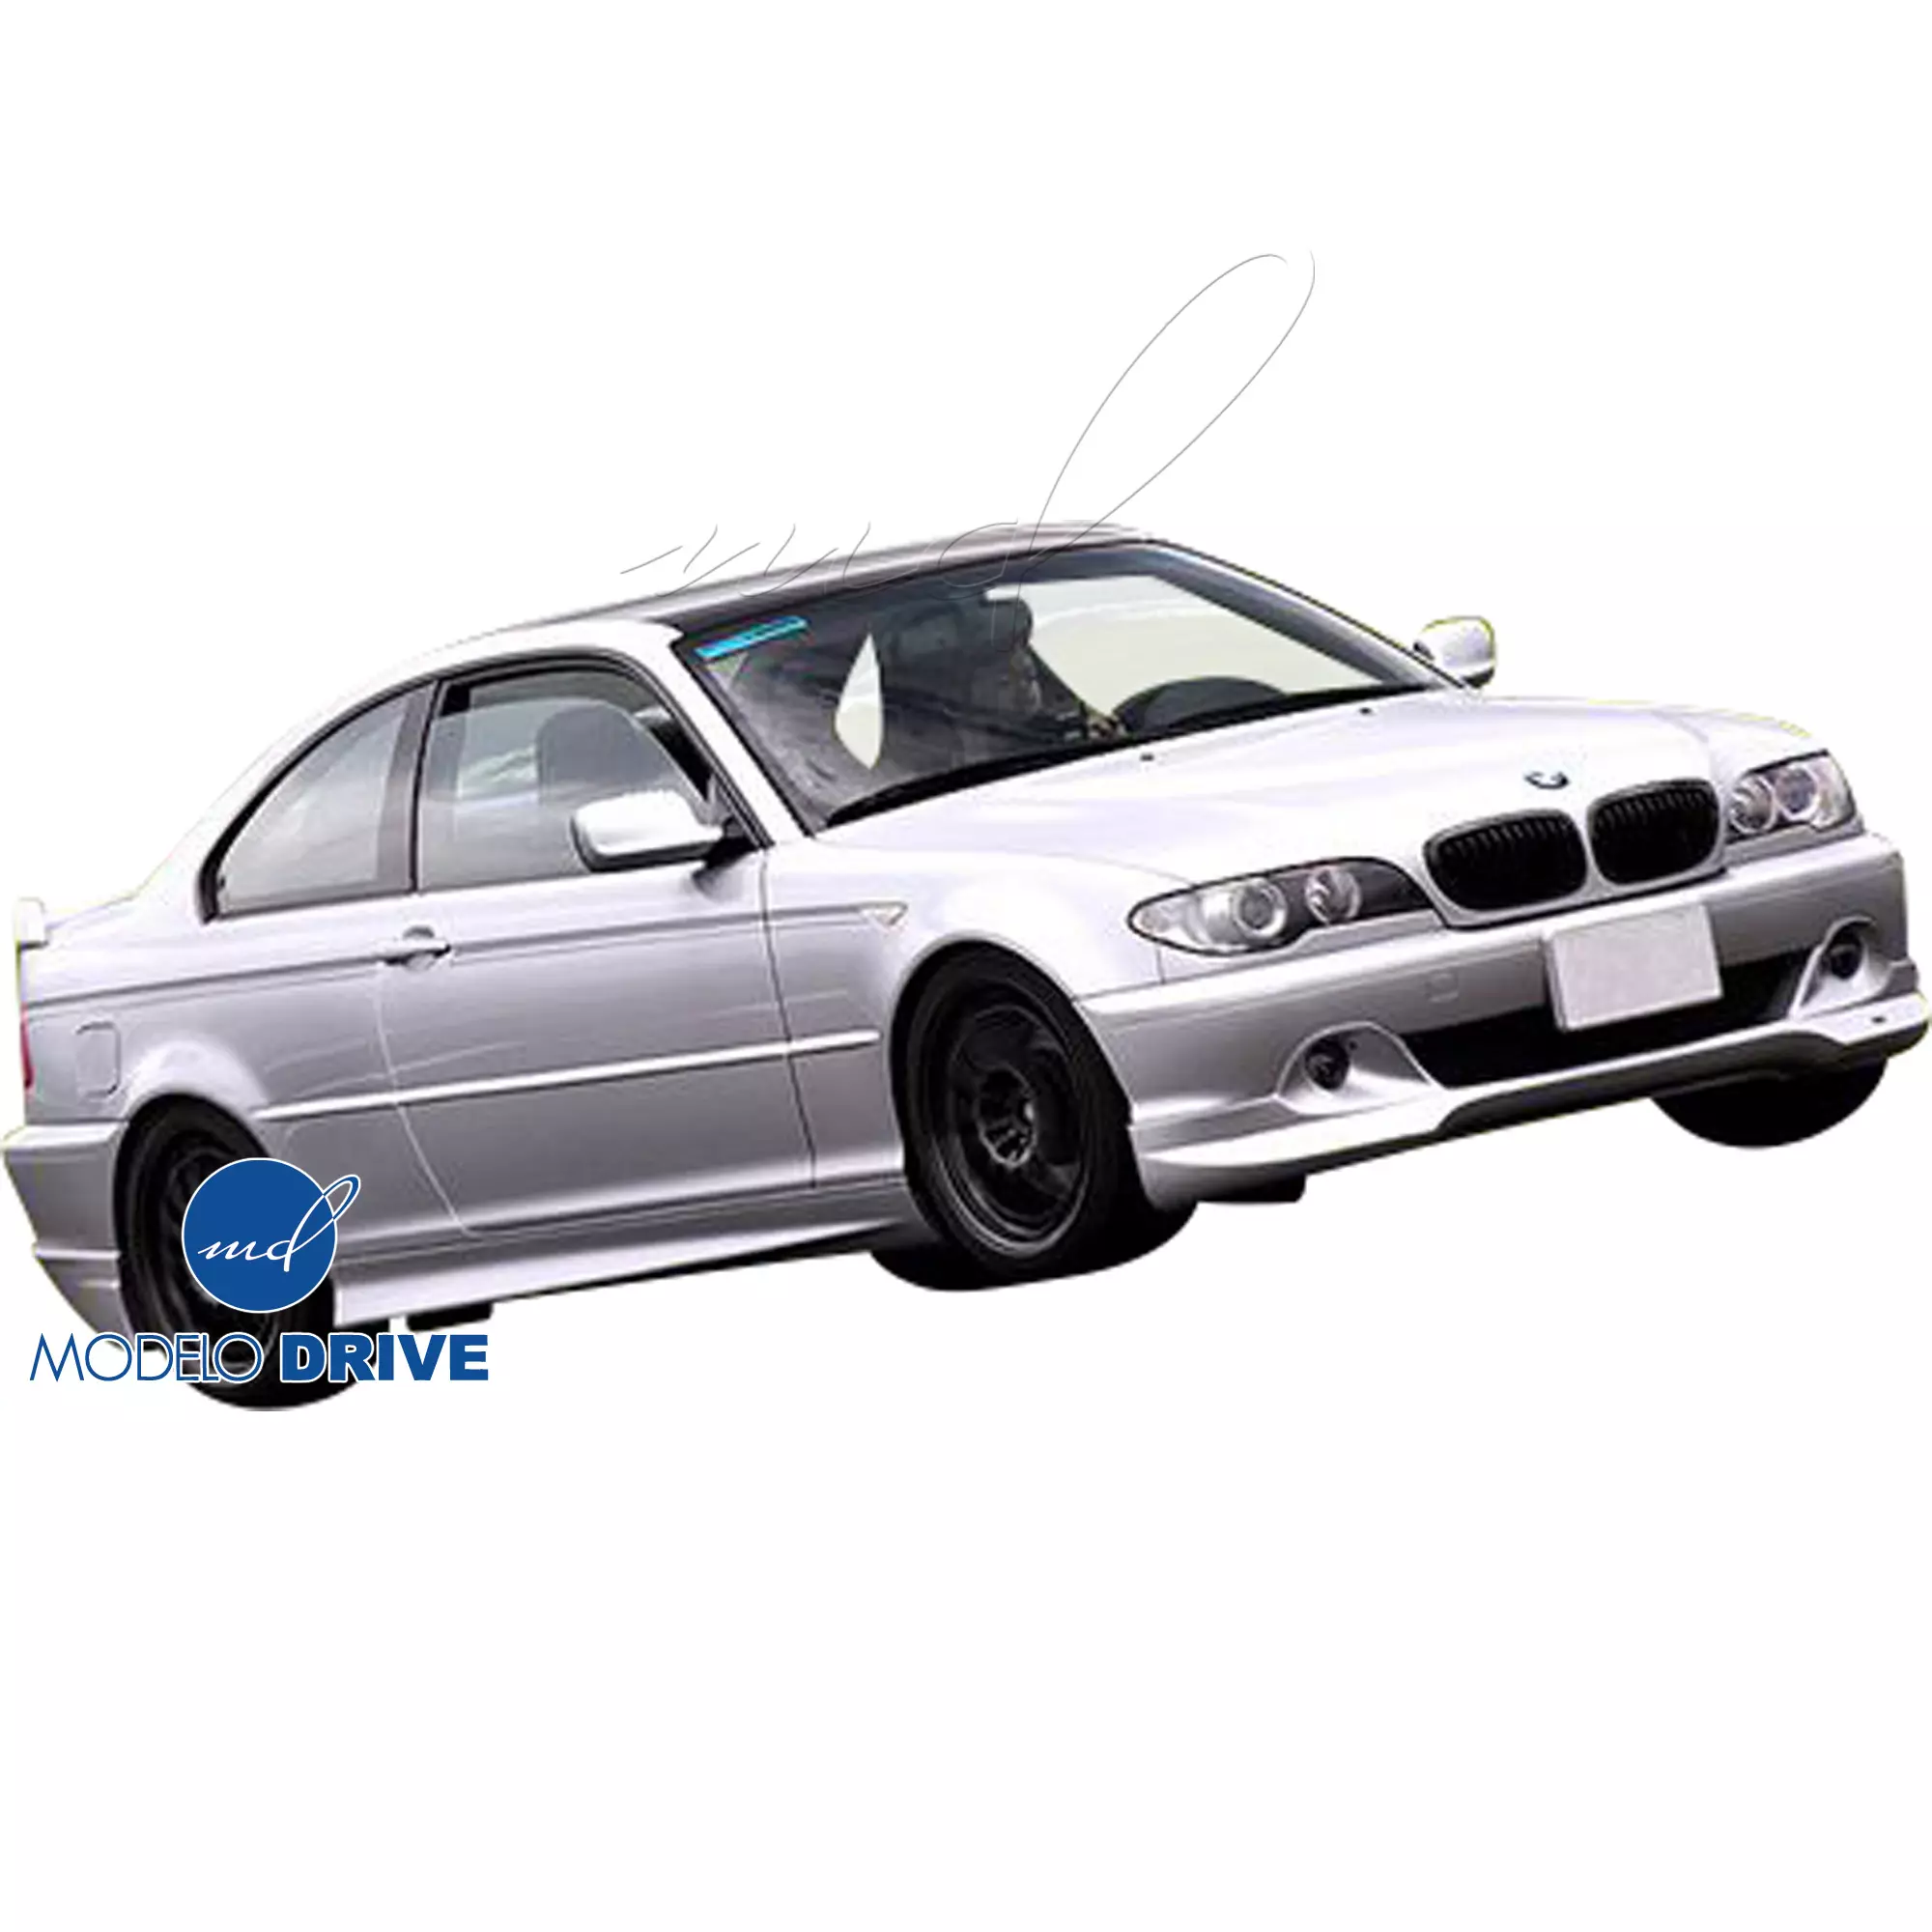 ModeloDrive FRP ASCH Trunk Spoiler Wing > BMW 3-Series E46 1999-2005 > 2dr - Image 8